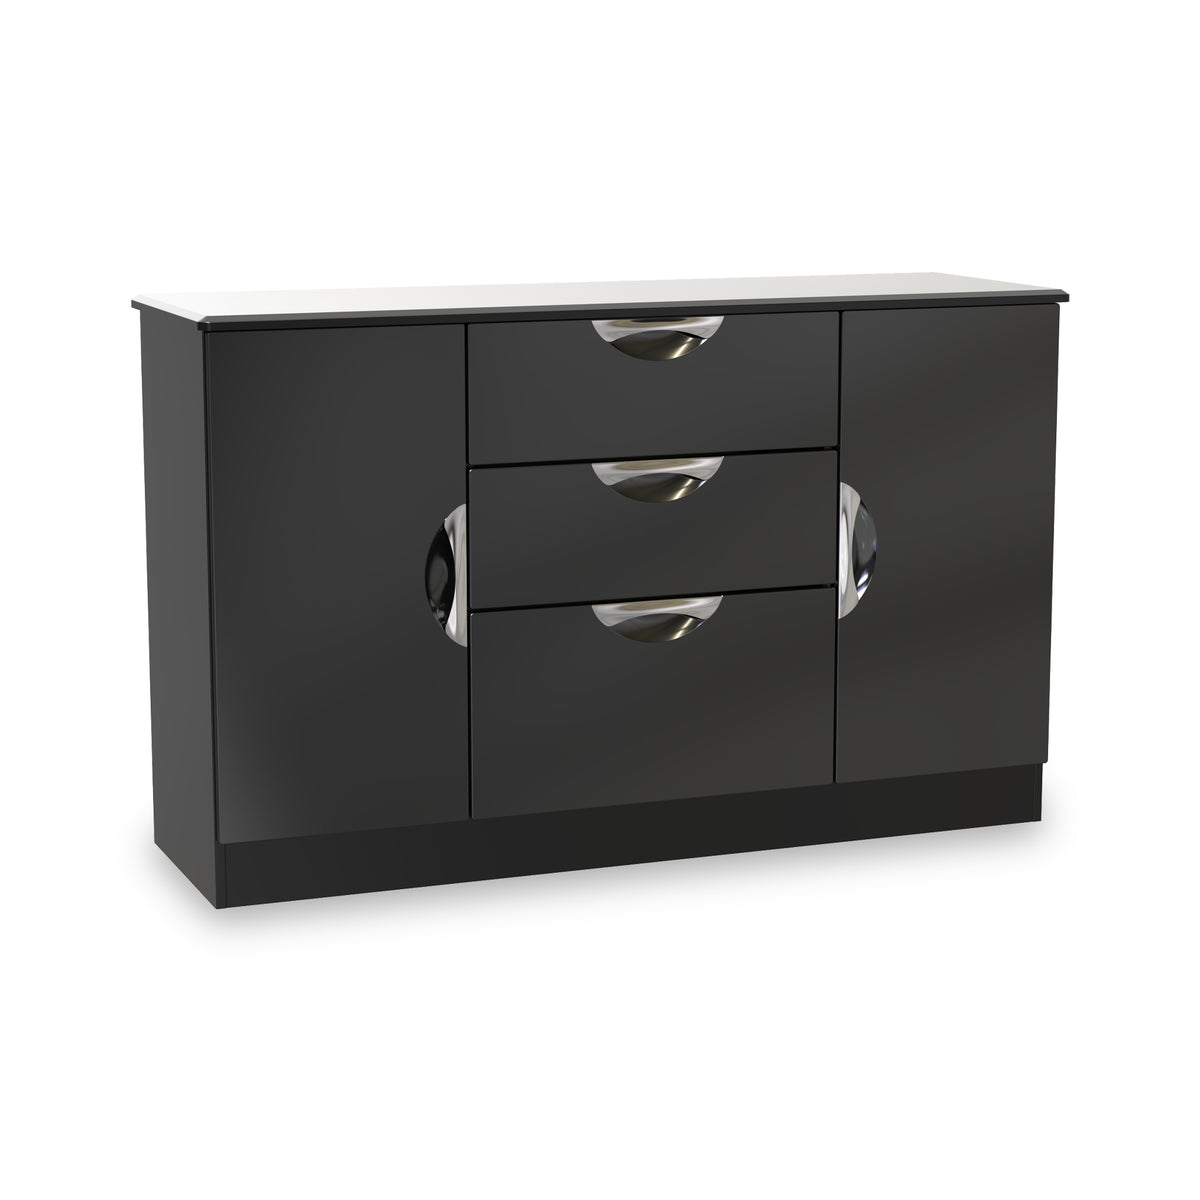 Beckett Black Gloss 2 Door 3 Drawer Sideboard Cabinet by Roseland Furniture